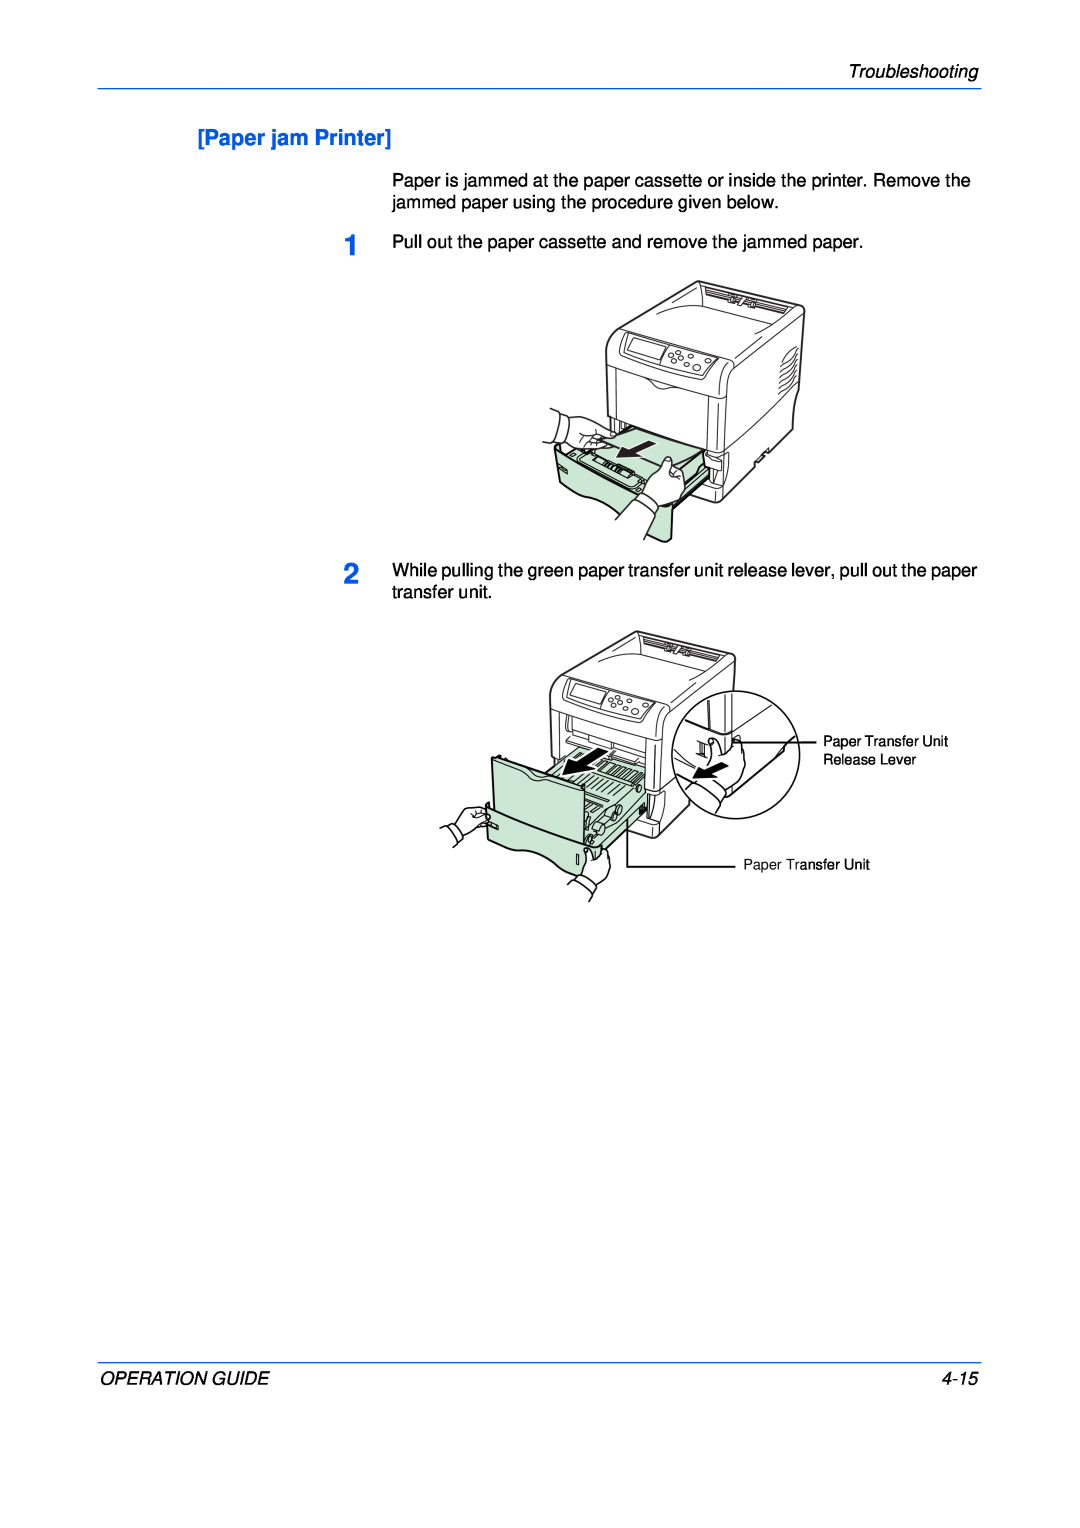 Kyocera FS-C5025N, FS-C5015N manual Paper jam Printer, Troubleshooting, Operation Guide, 4-15 